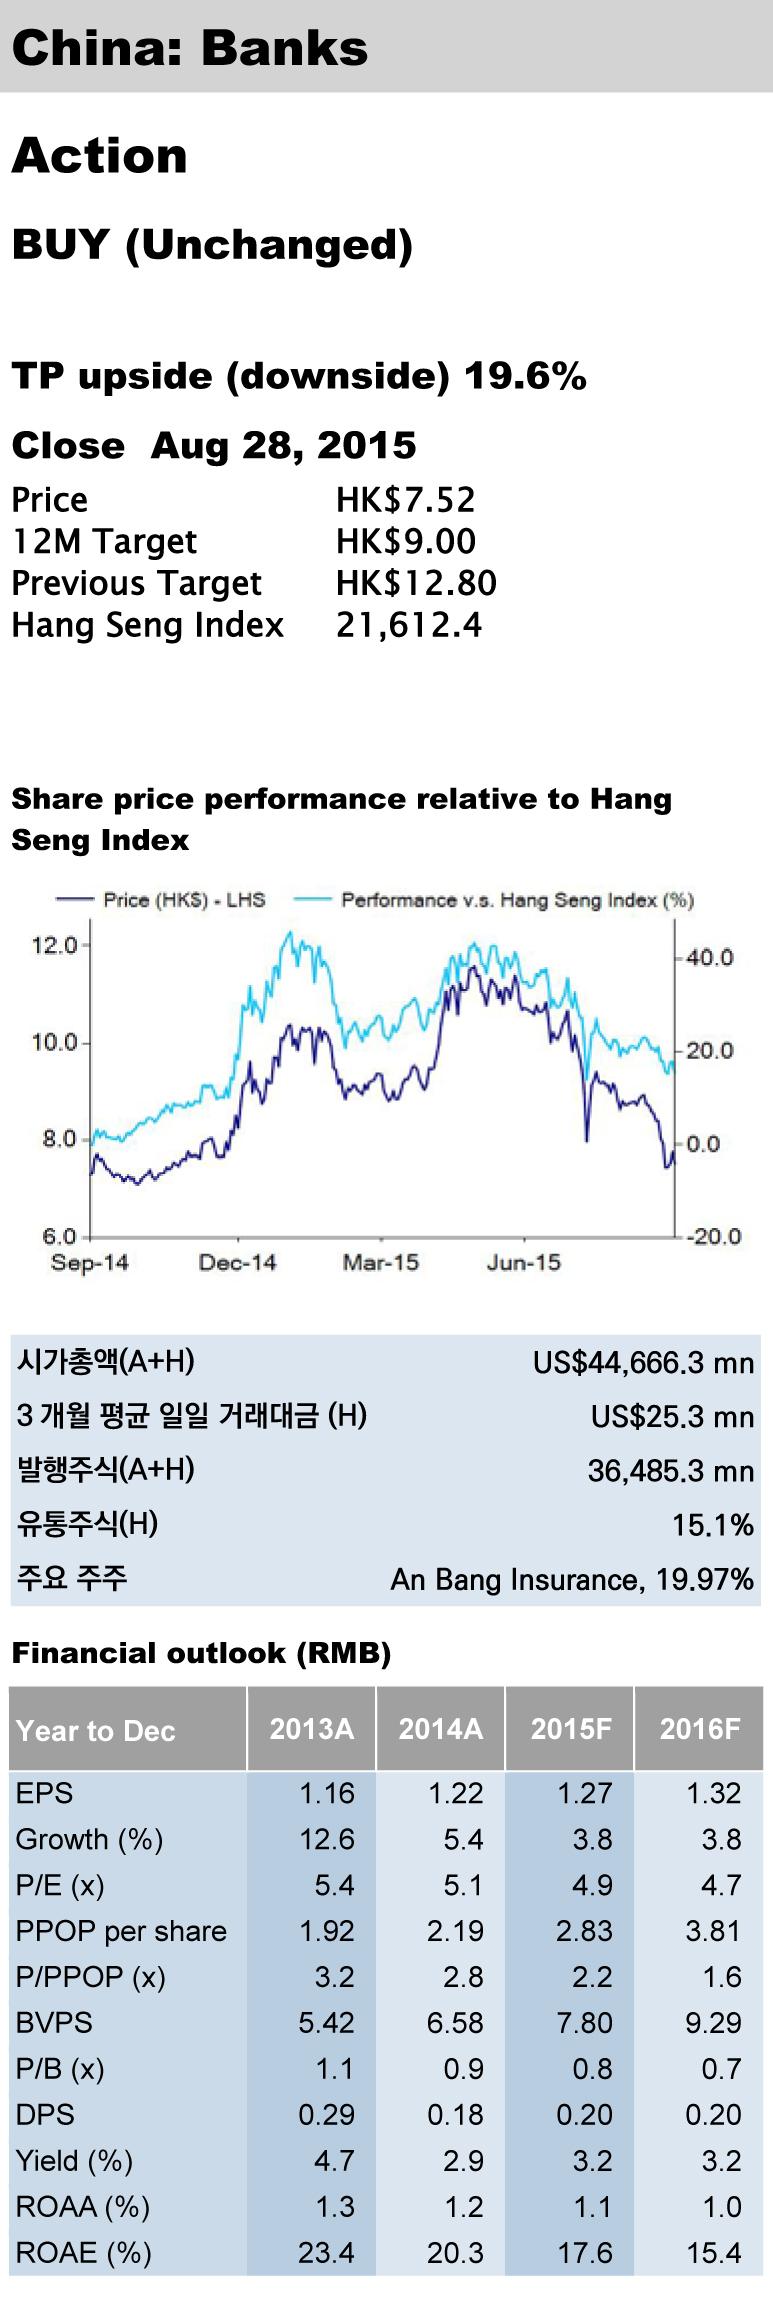 Analyst: Peter Chu CFA (홍콩) +852 3969 9521 / peter.kk.chu@yuanta.com 중국 기업 분석 중국민생은행 (01988 HK) 견조한 비이자이익 증가 하반기에도 지속 예상 투자 의견 유지하나 목표 주가 HK$9.0로 하향: 잇따른 금리인하로 인 한 동사의 상반기 이자이익 전년 대비 5.